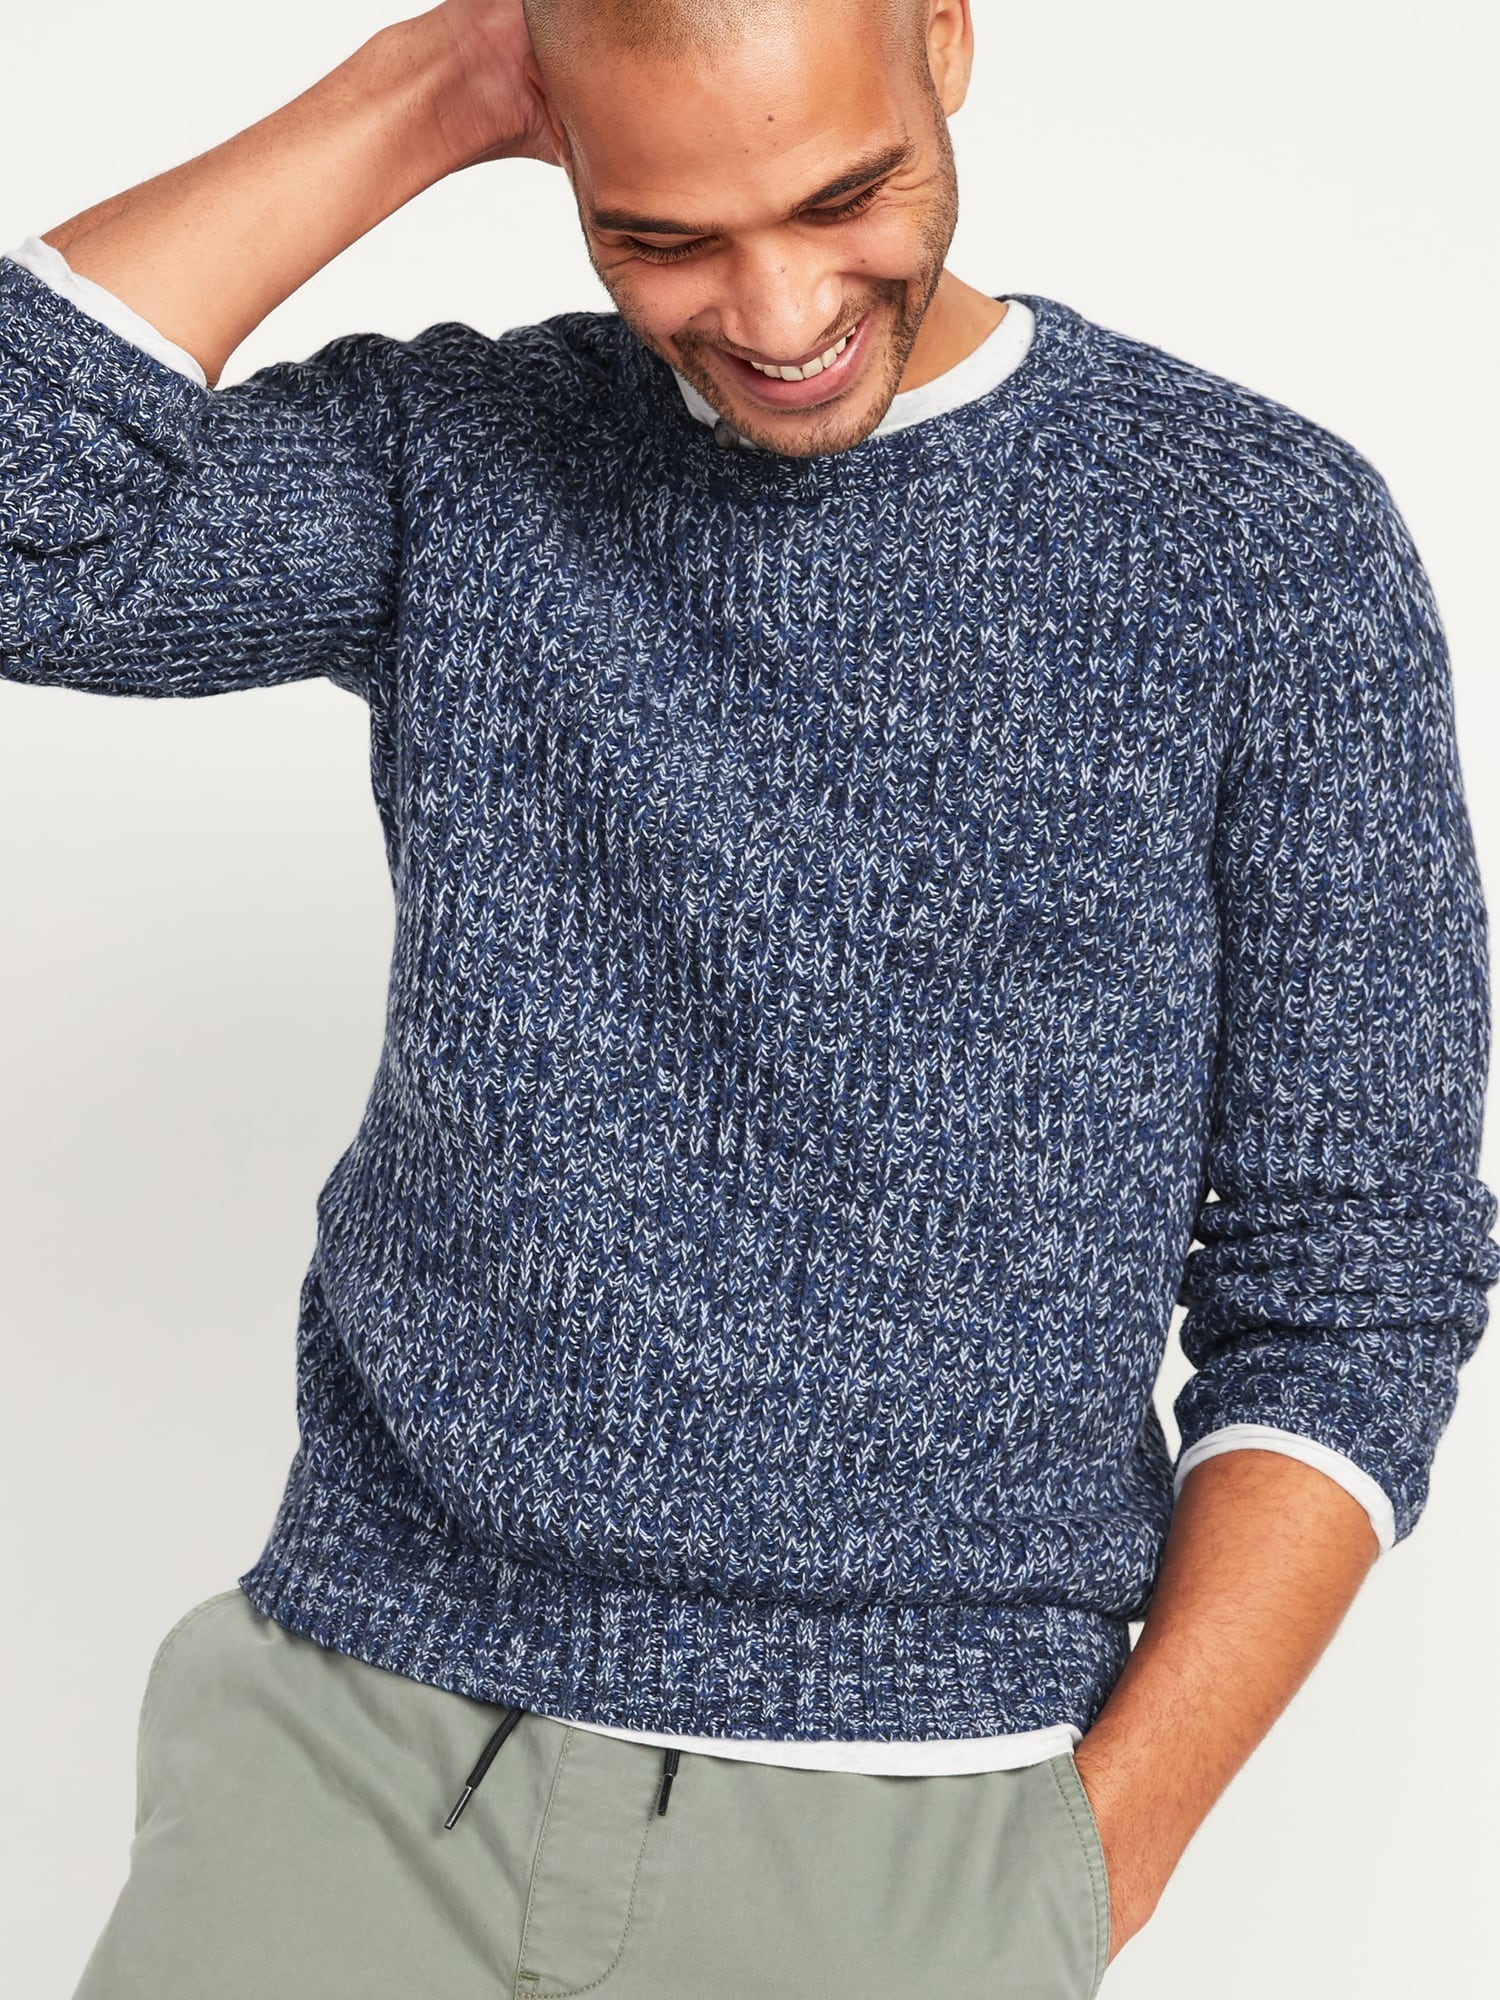 Textured Rib-Knit Crew-Neck Sweater | Old Navy